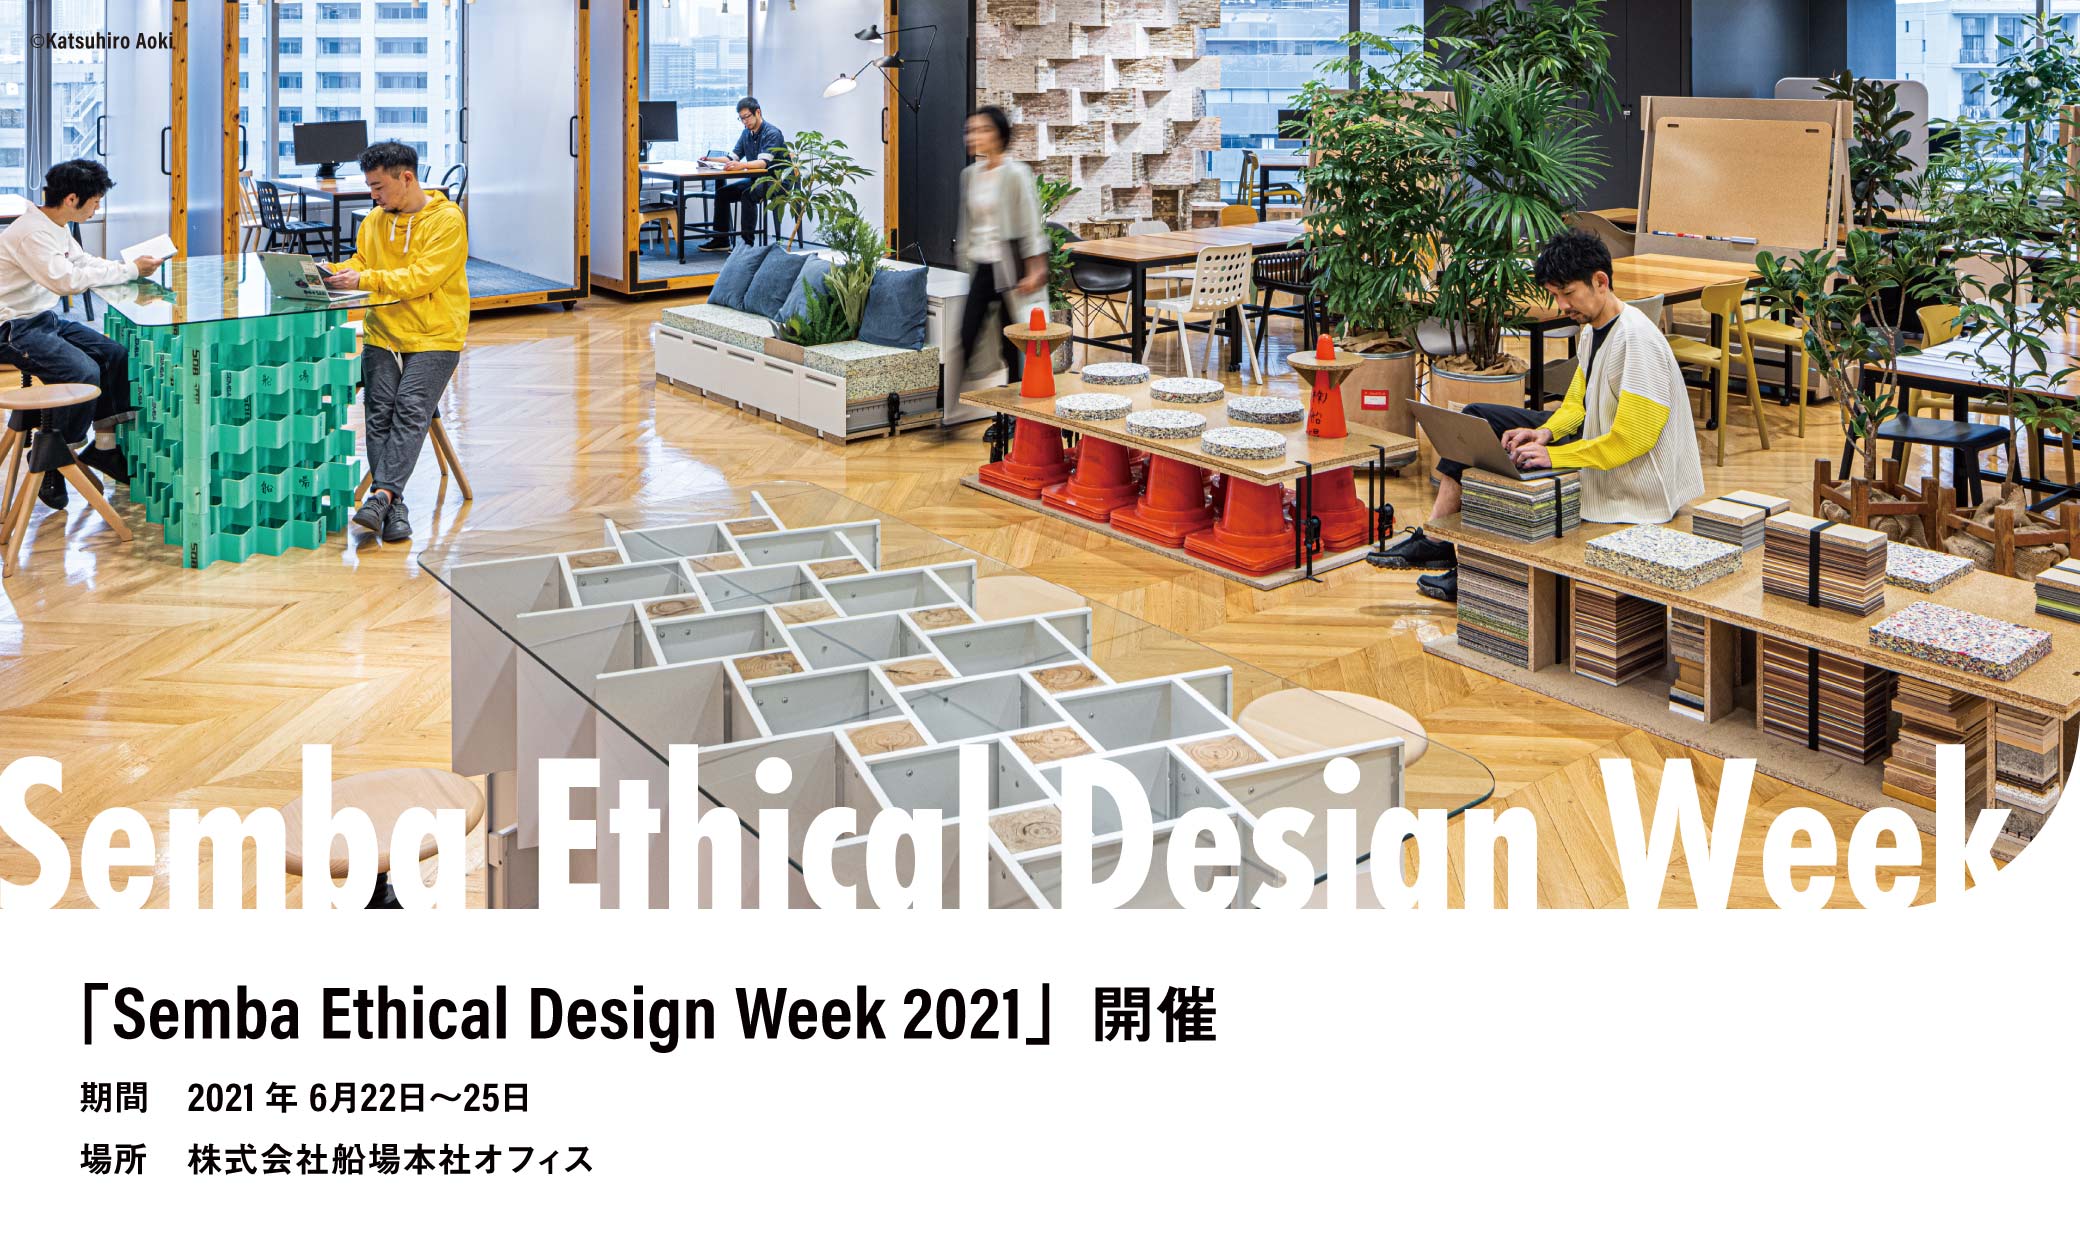 「Semba Ethical Design Week 2021」を開催